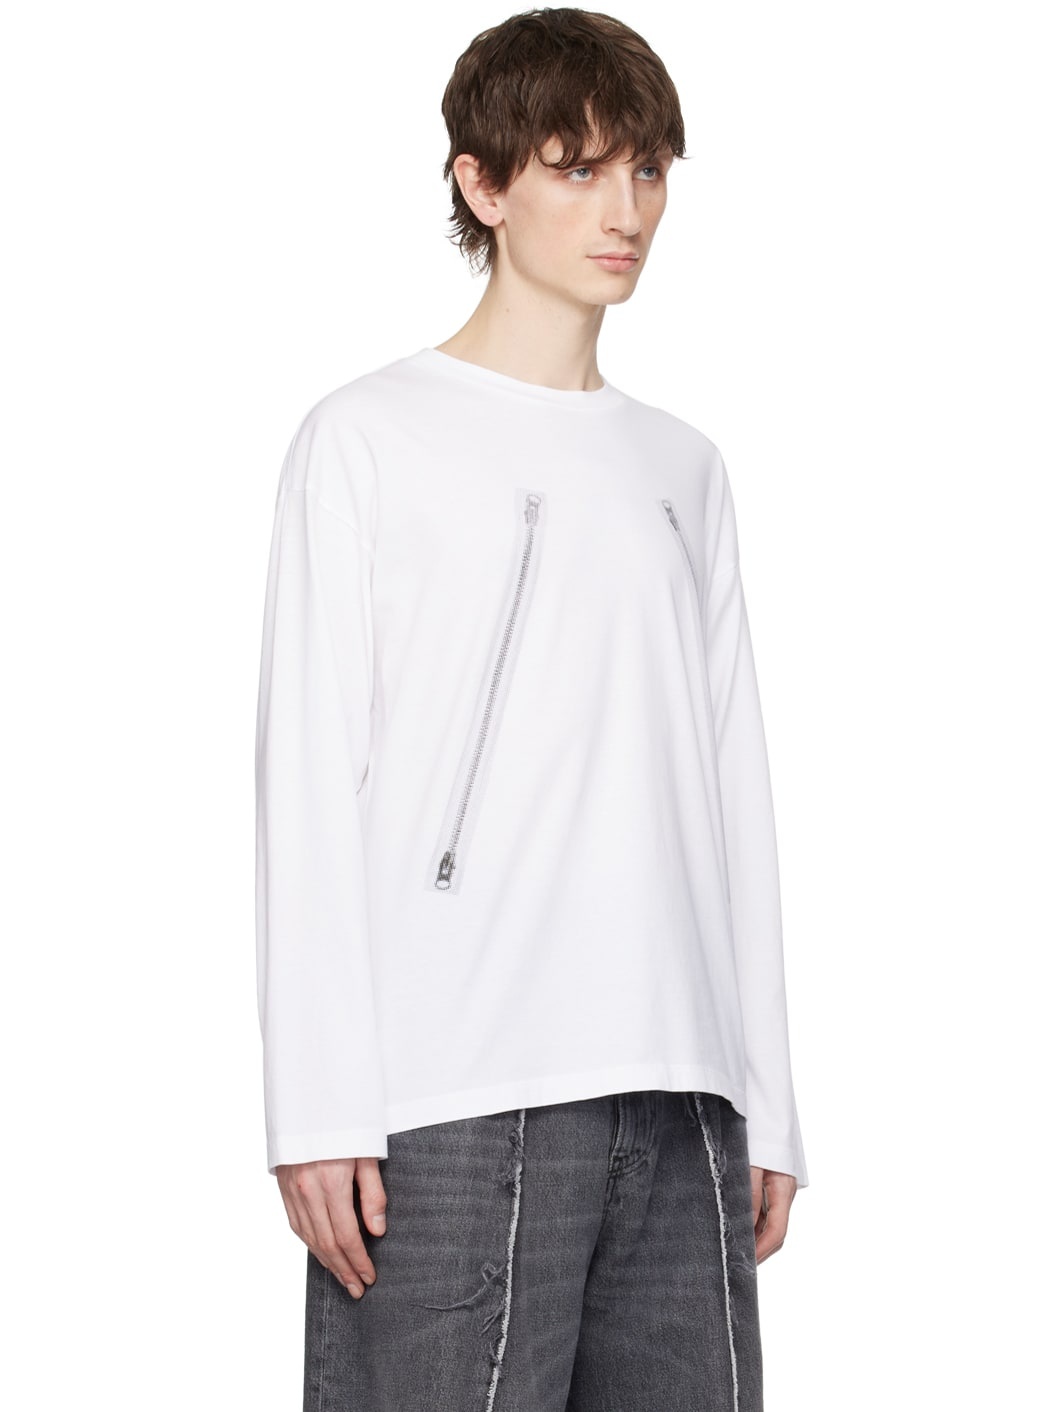 White Rasterised Zip Long Sleeve T-Shirt - 2